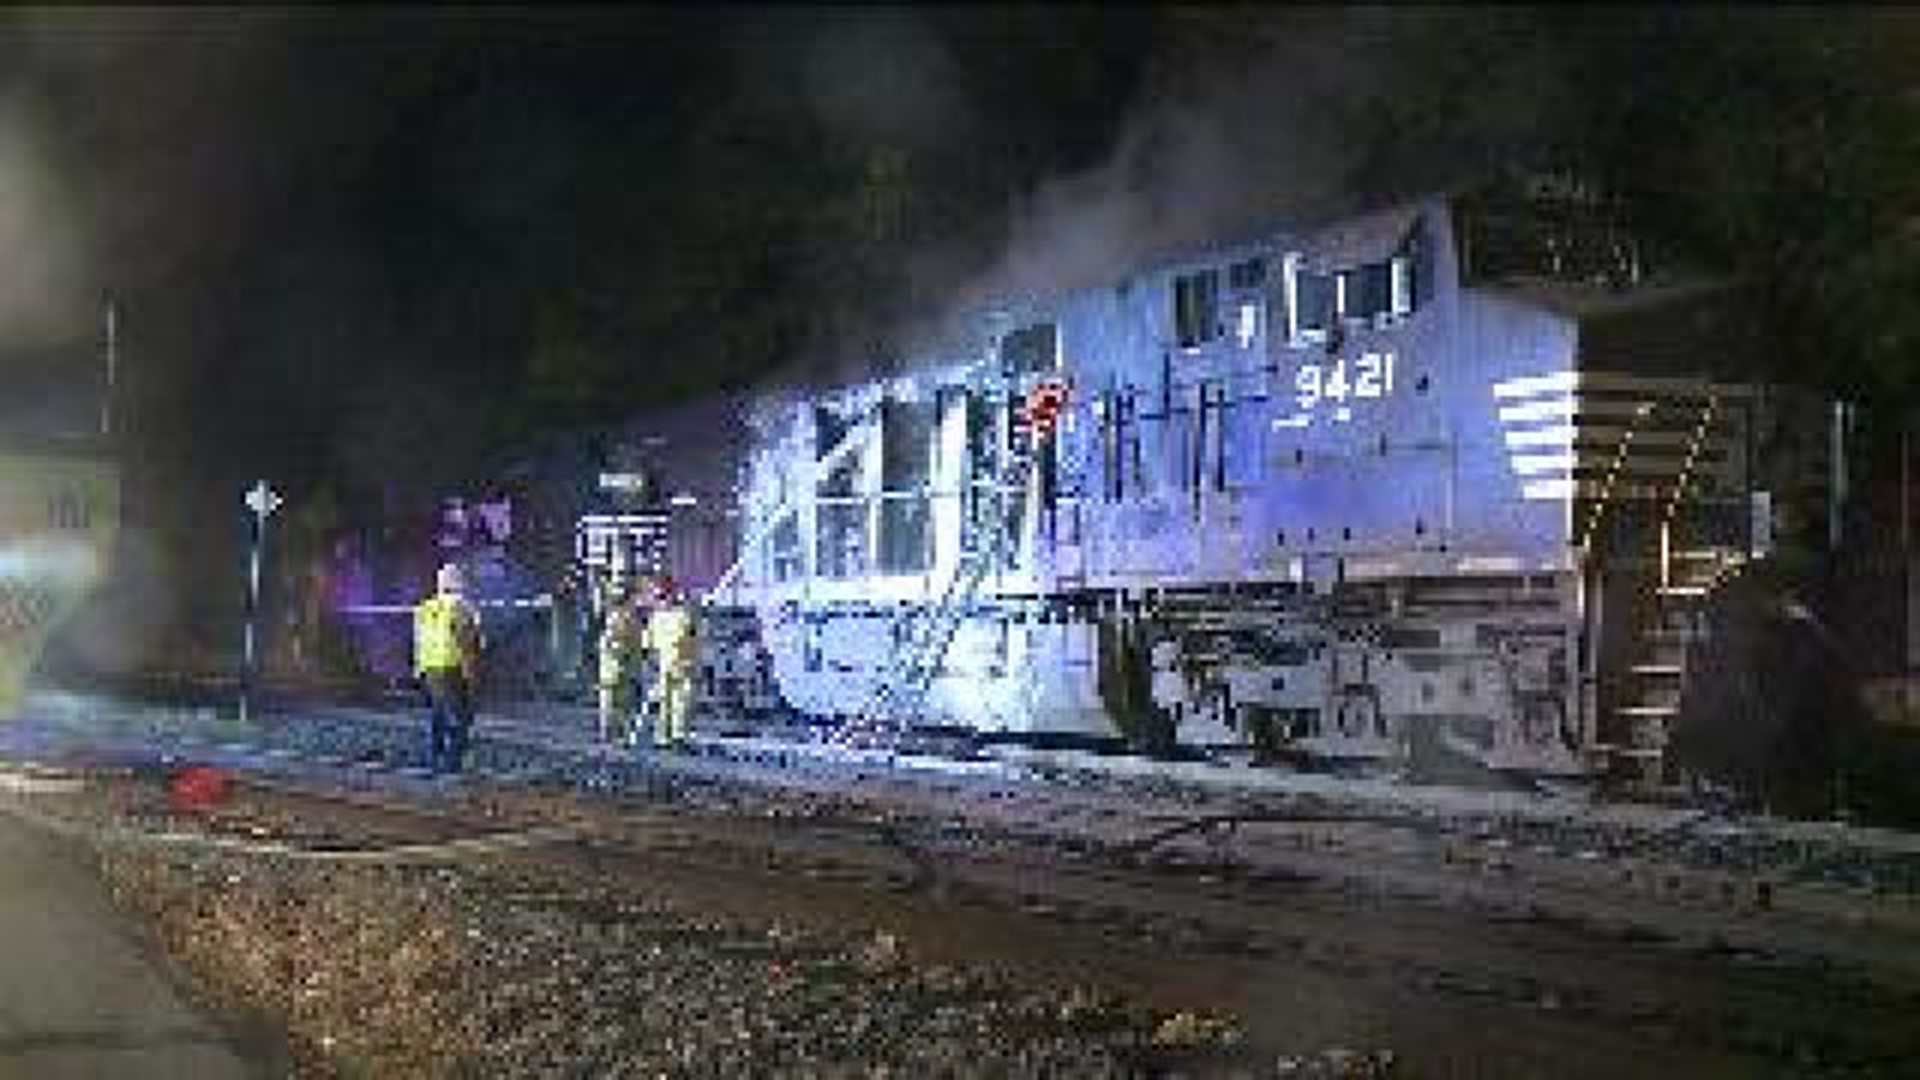 Train Engine Catches Fire, Blocks Traffic